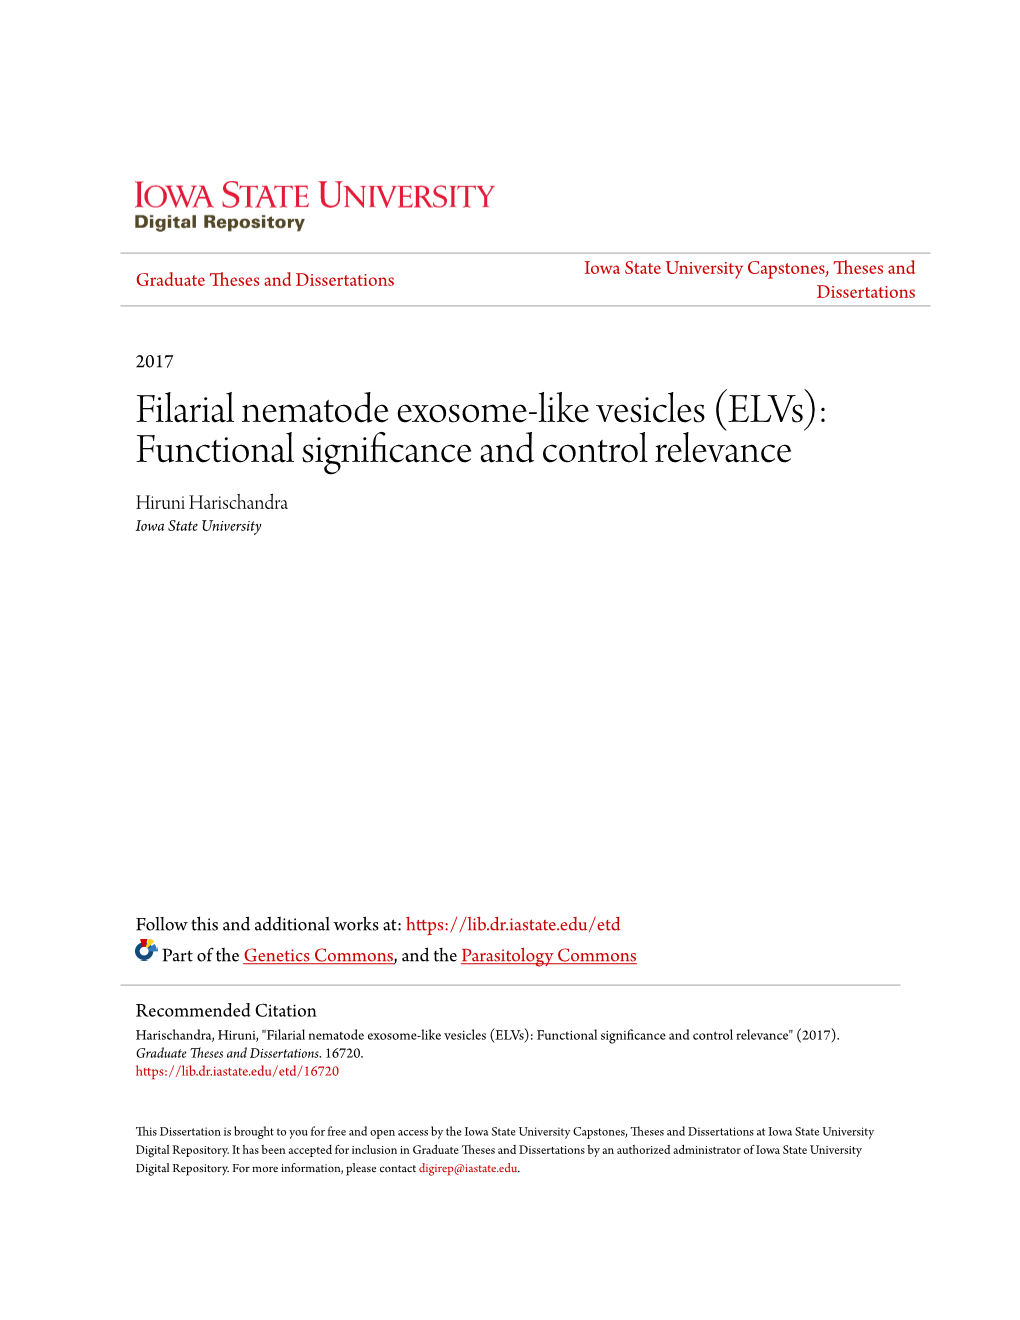 Filarial Nematode Exosome-Like Vesicles (Elvs): Functional Significance and Control Relevance Hiruni Harischandra Iowa State University